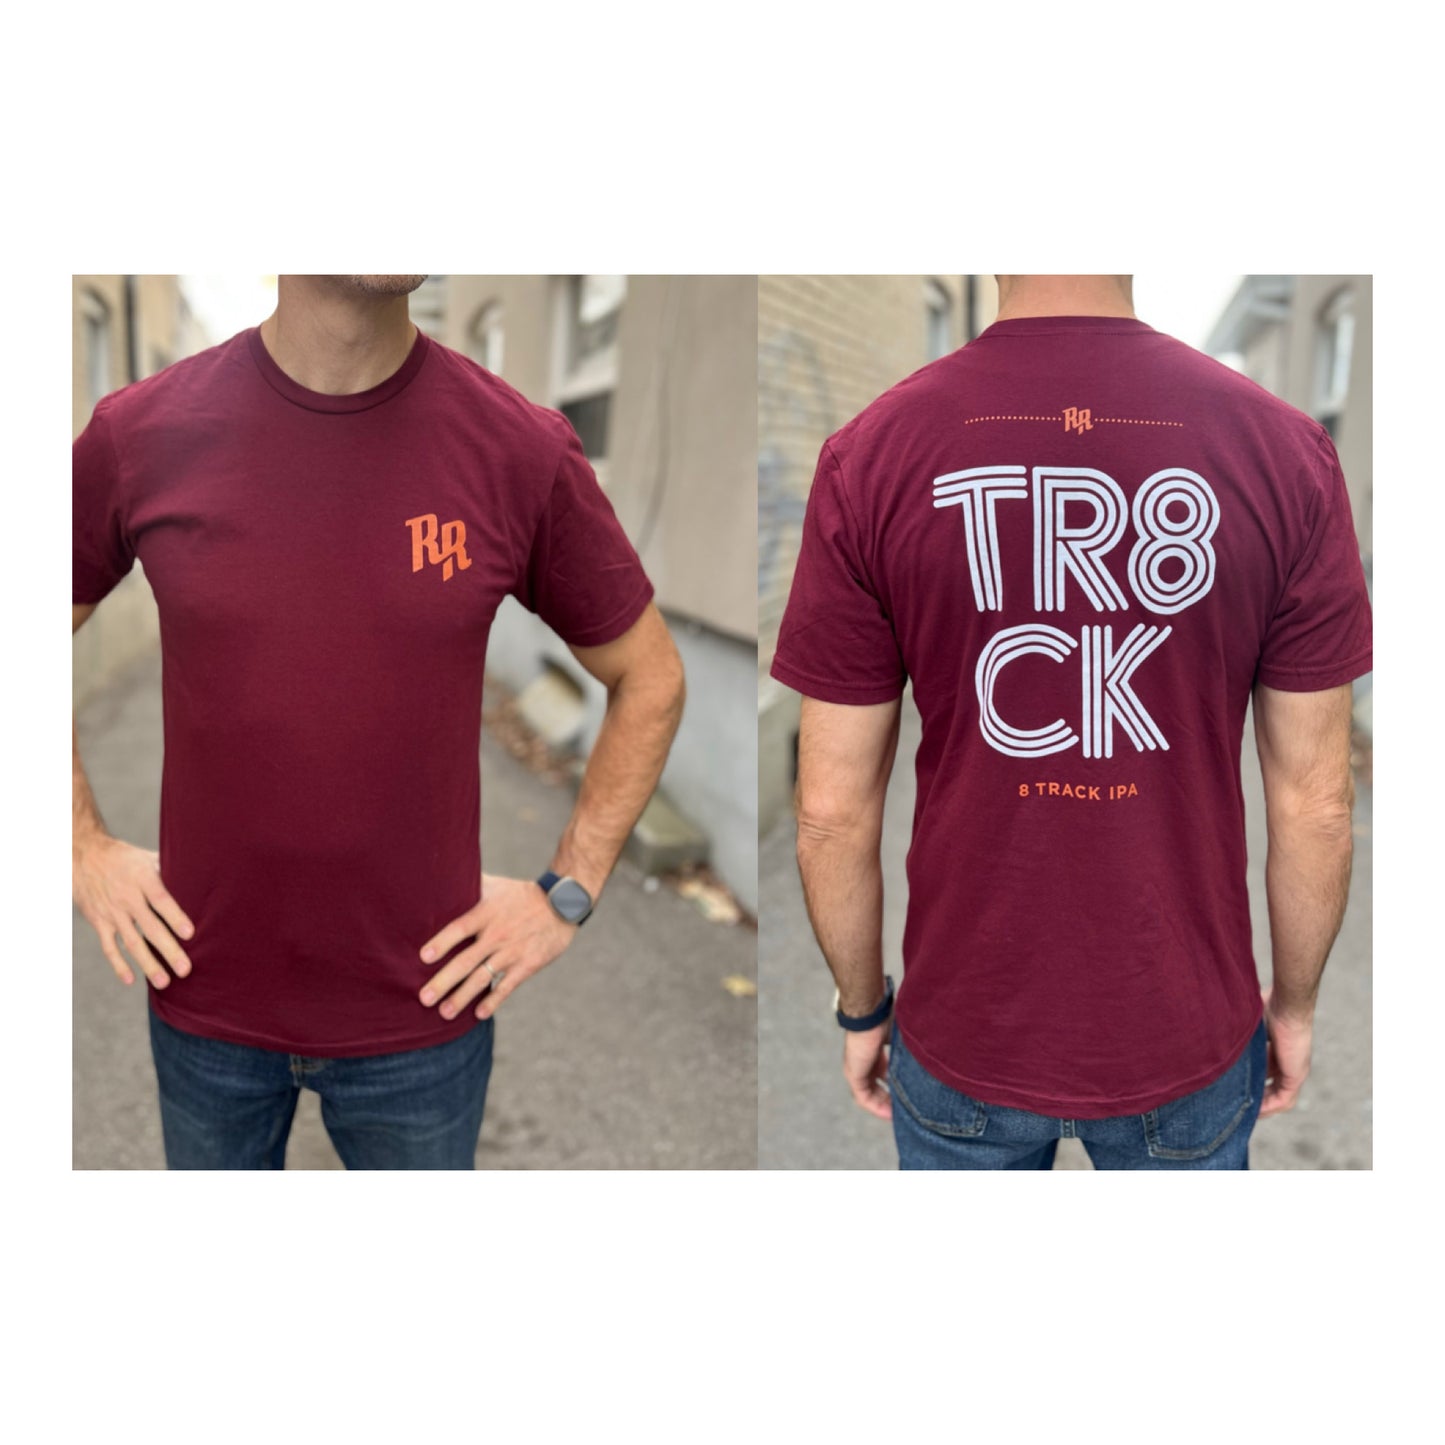 8Track T-shirt